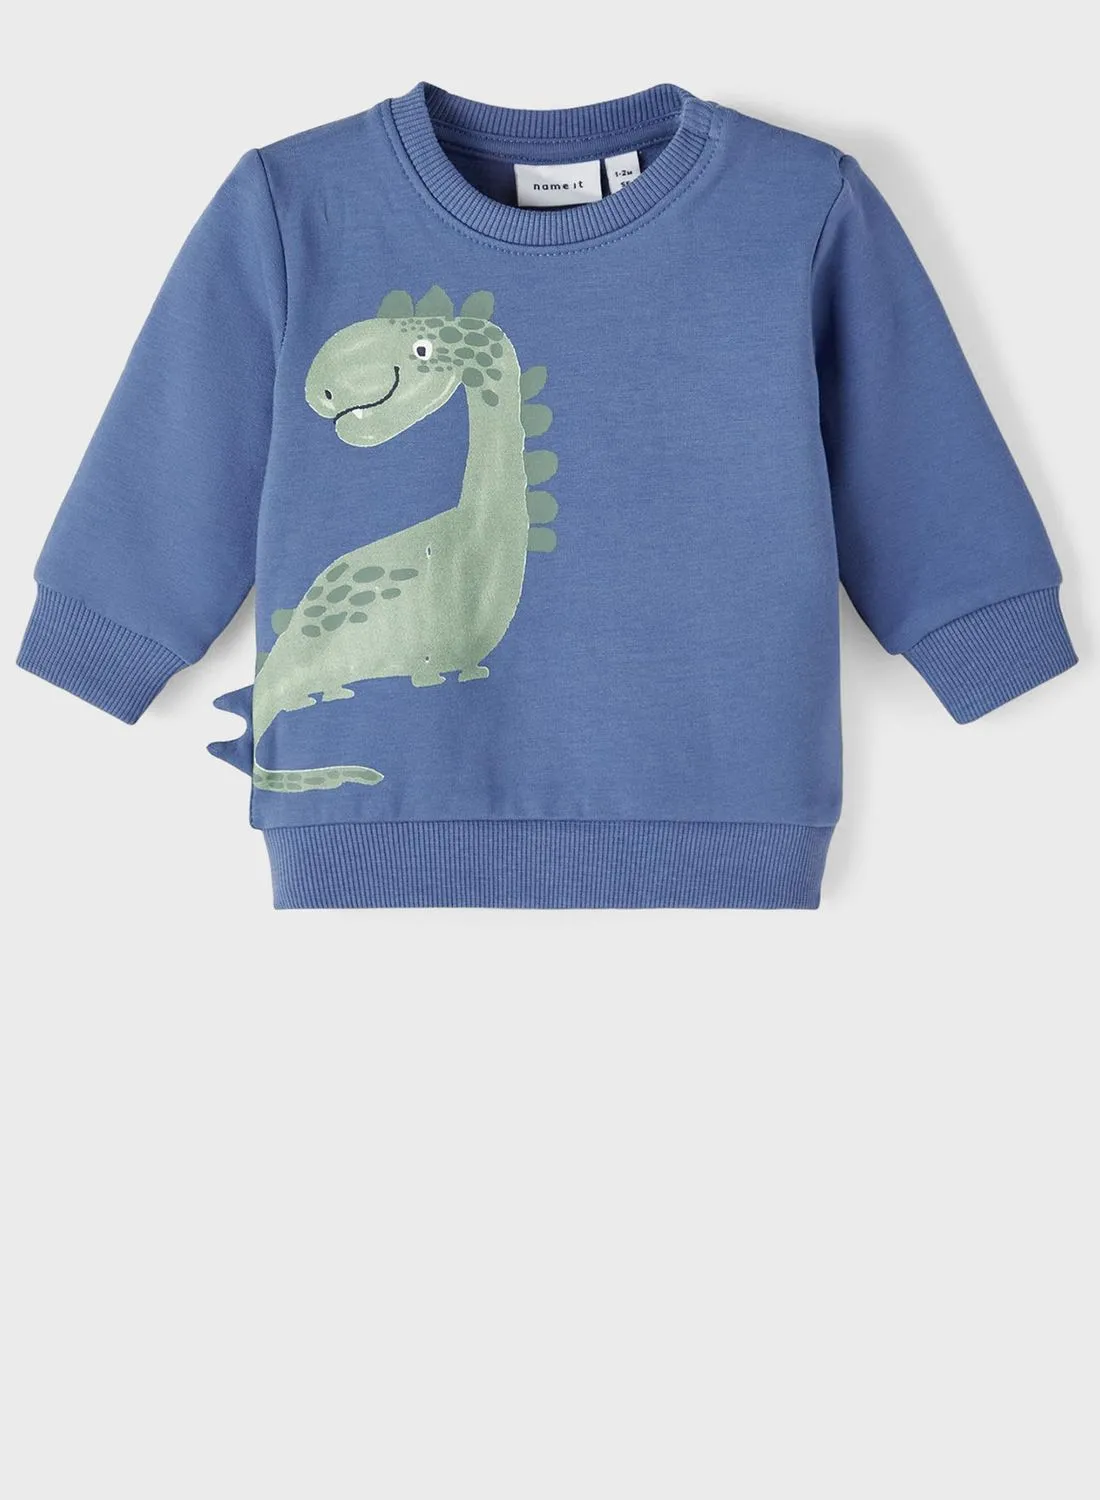 NAME IT Infant Dino Print Sweatshirt